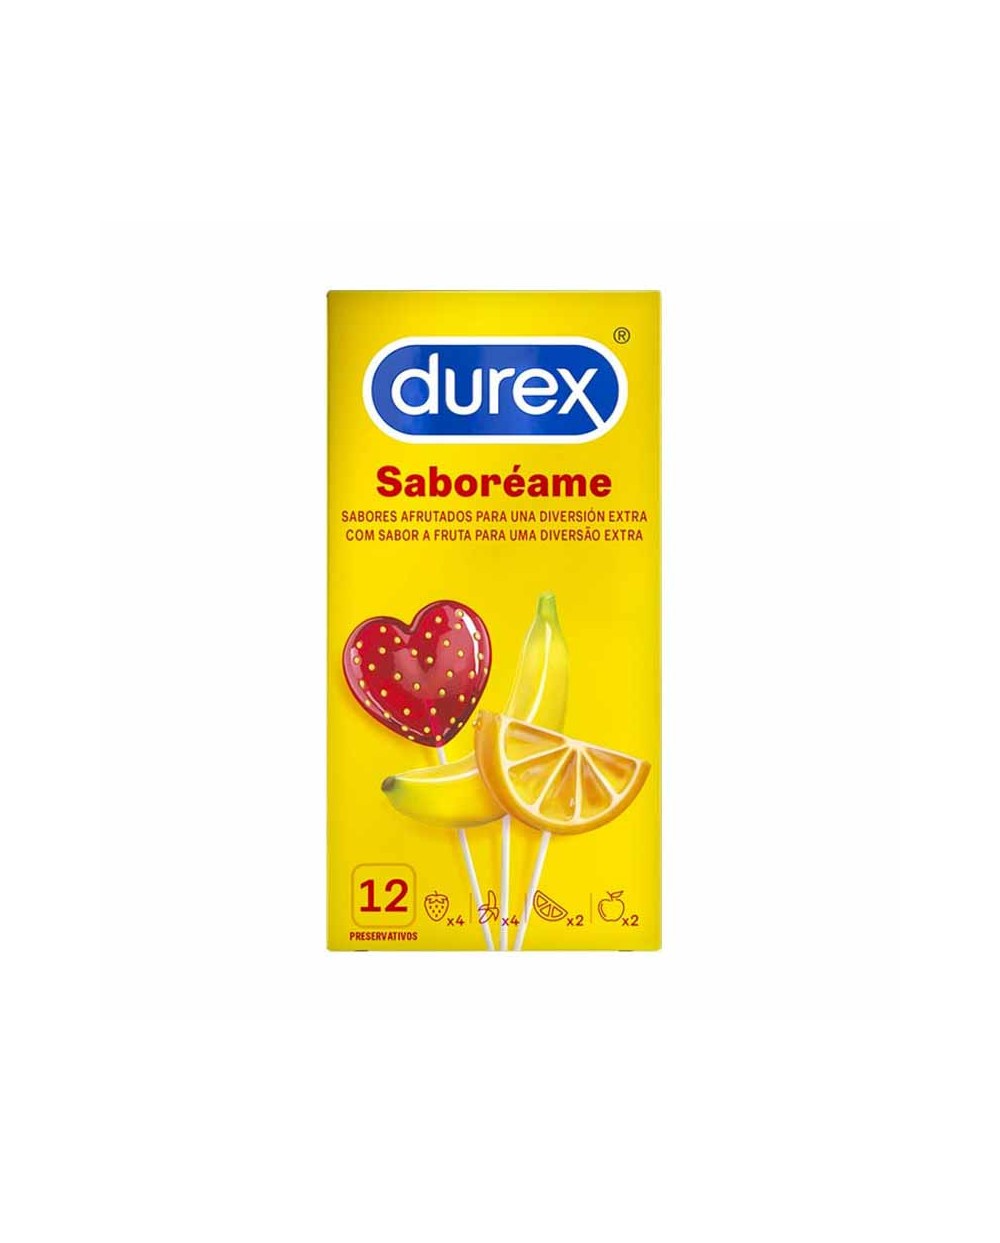 Preservativos Durex Saboréame - 12 unidades